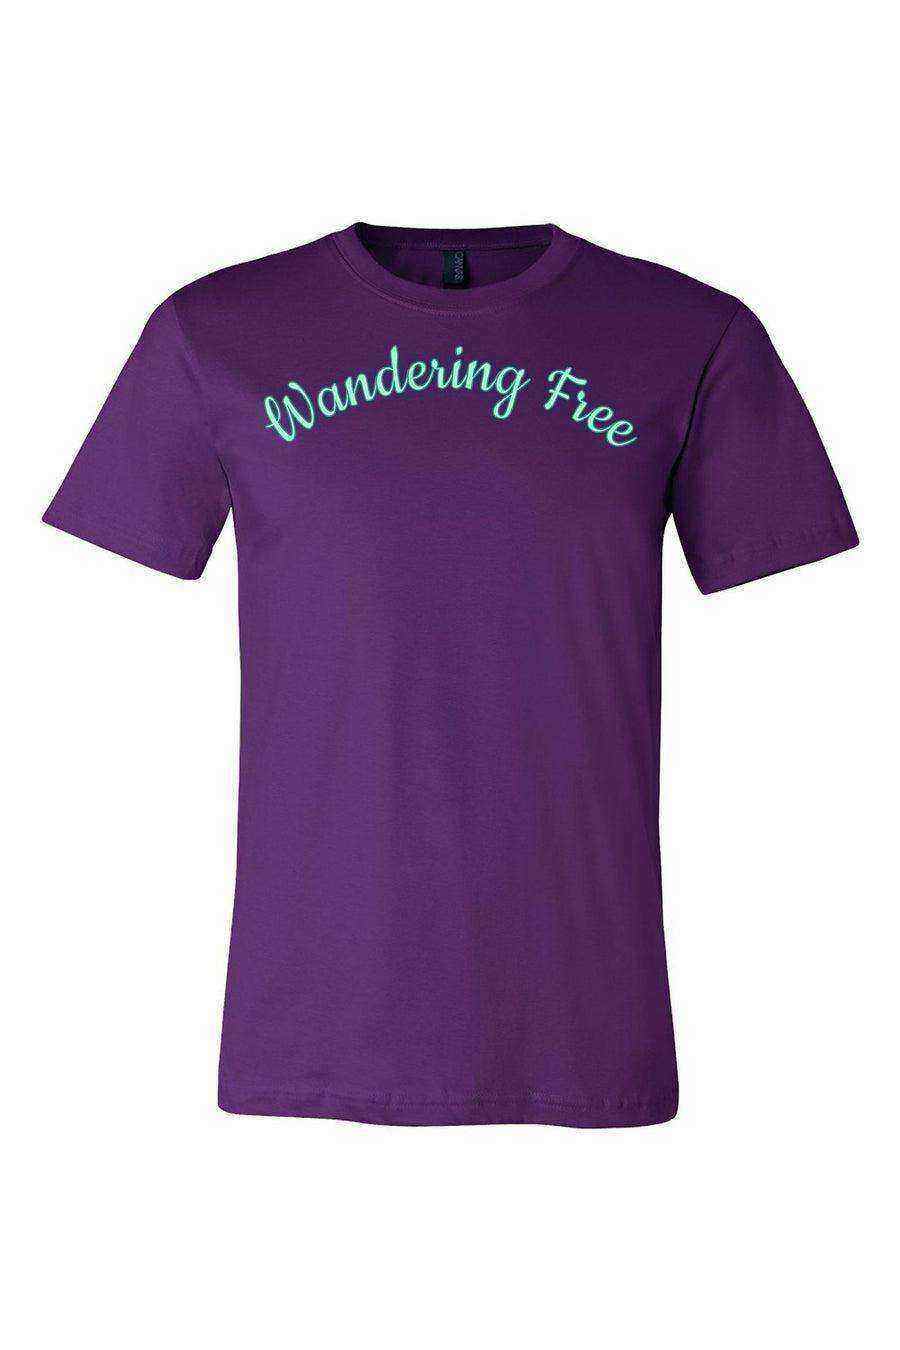 Wandering Free Shirt | Mermaid Shirt | Part Of Your World Shirt - Dylan's Tees